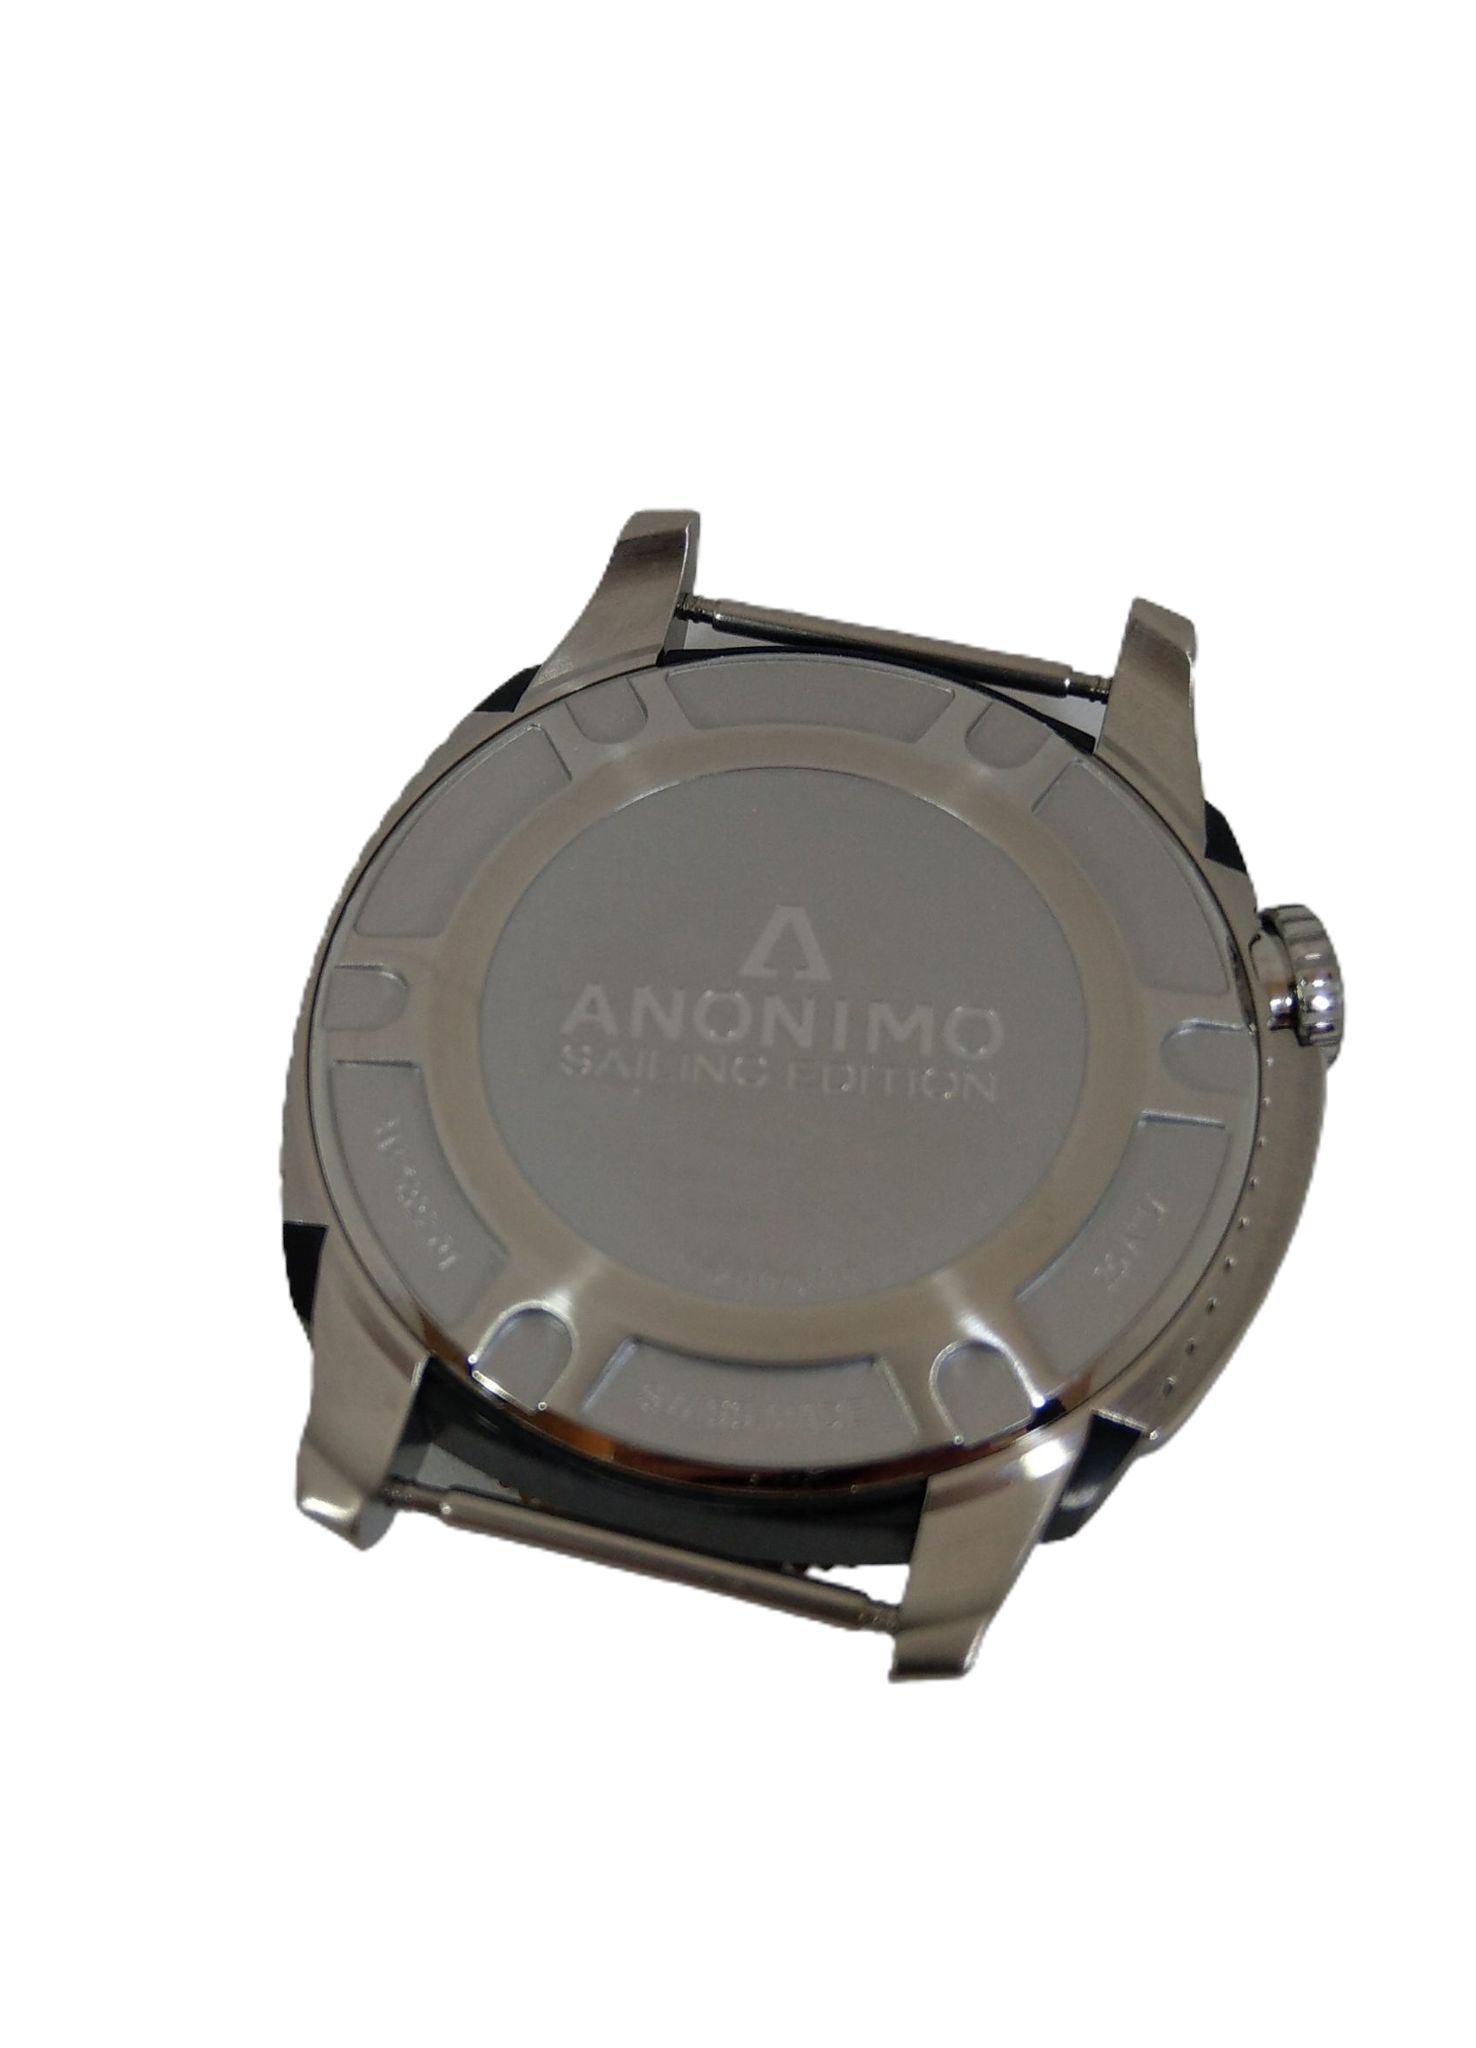 Anonimo Nautilo Automatic AM 1002.01 Uhrband schwarz rot